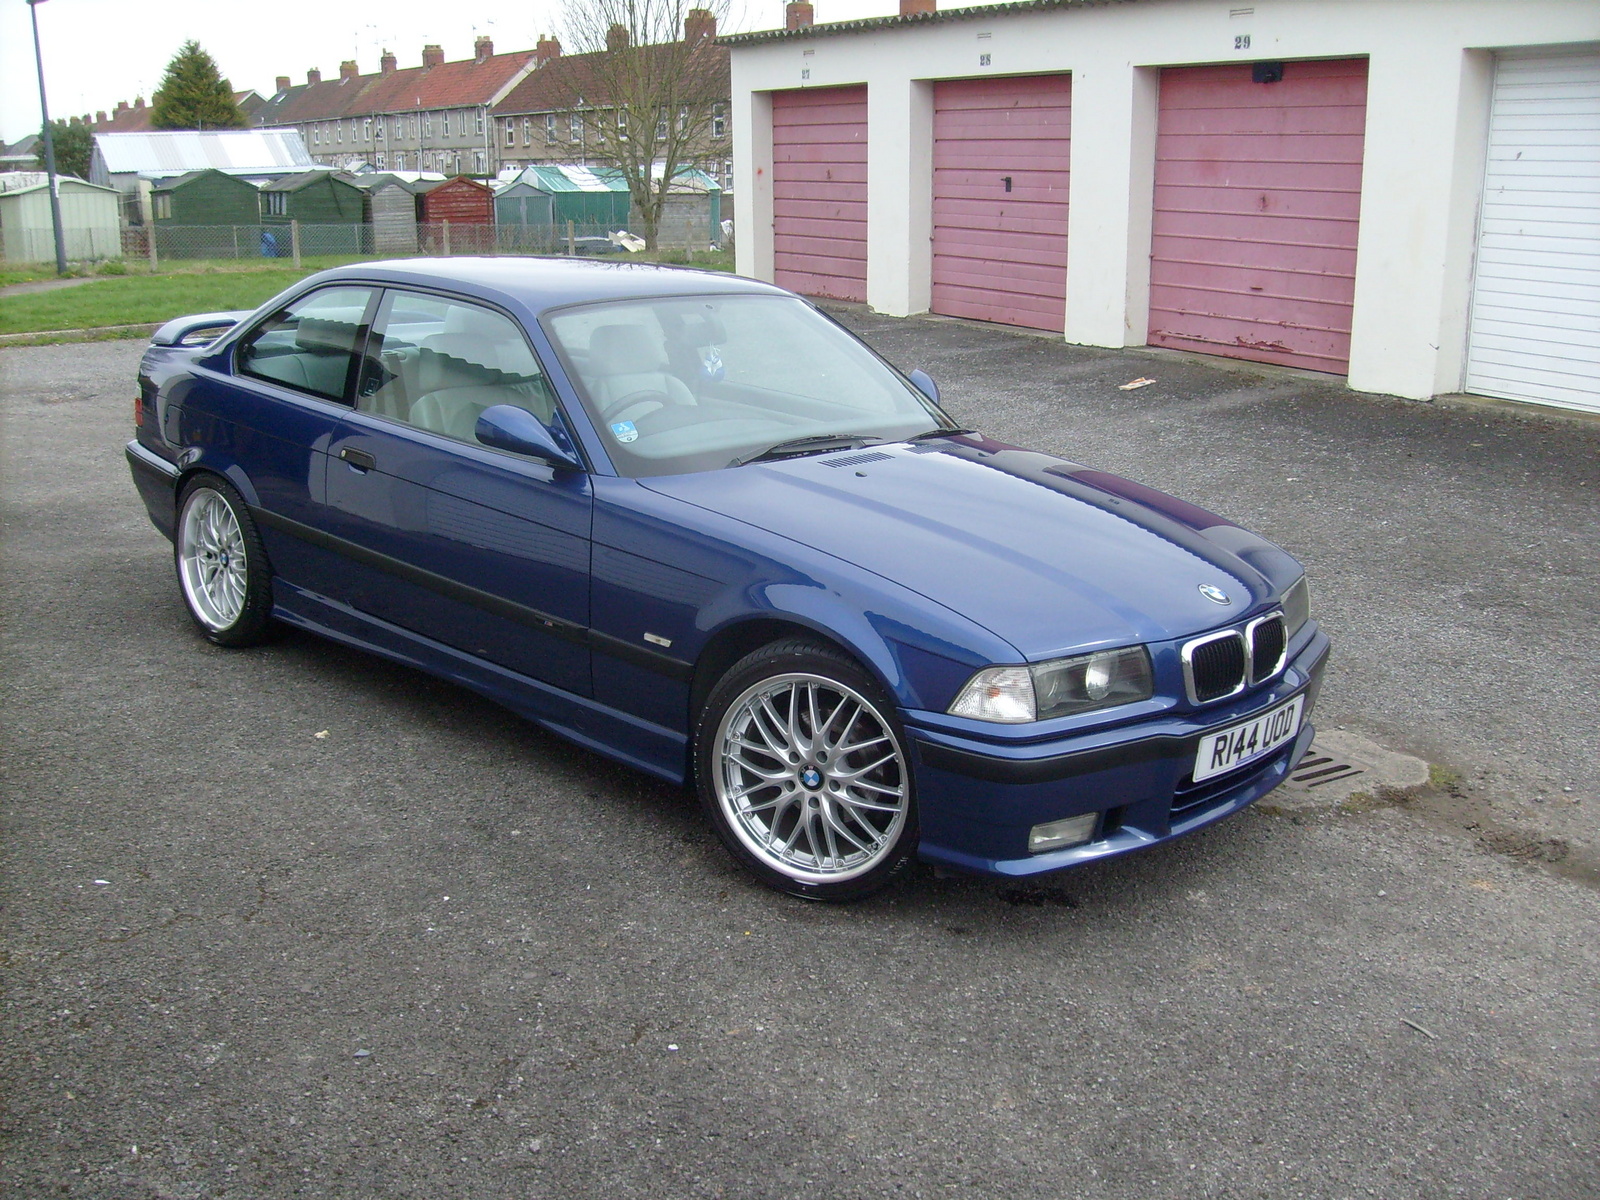 BMW 328iS 1998 photo - 3